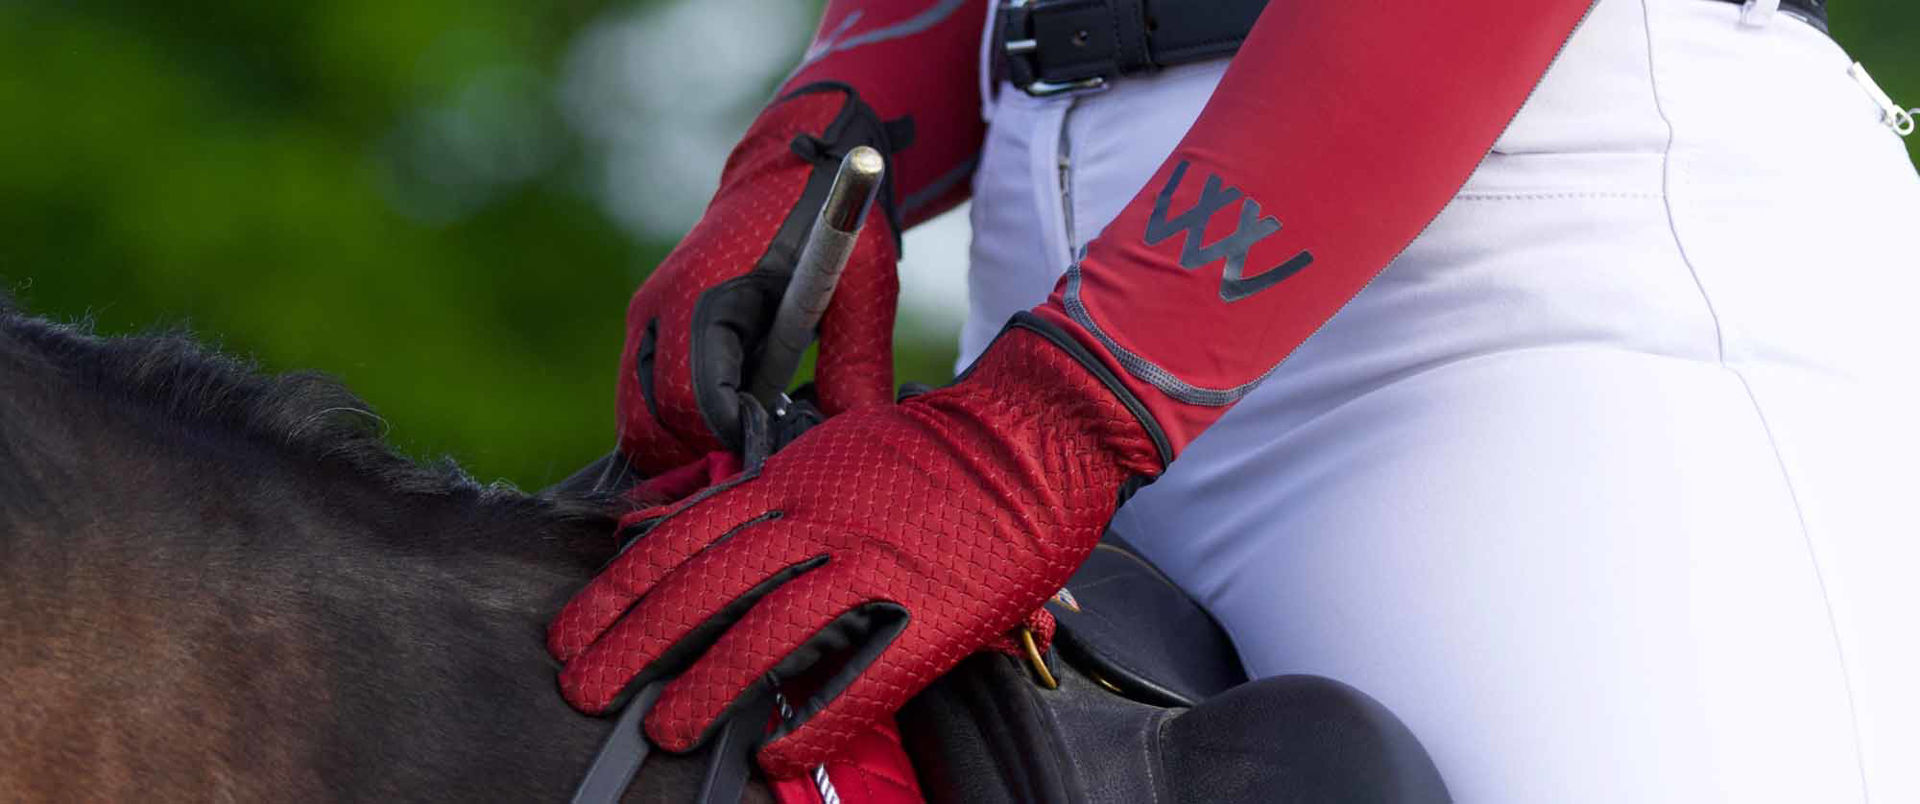 Ocean All Sizes Woof Wear Zennor Gloves Everyday Riding Glove 